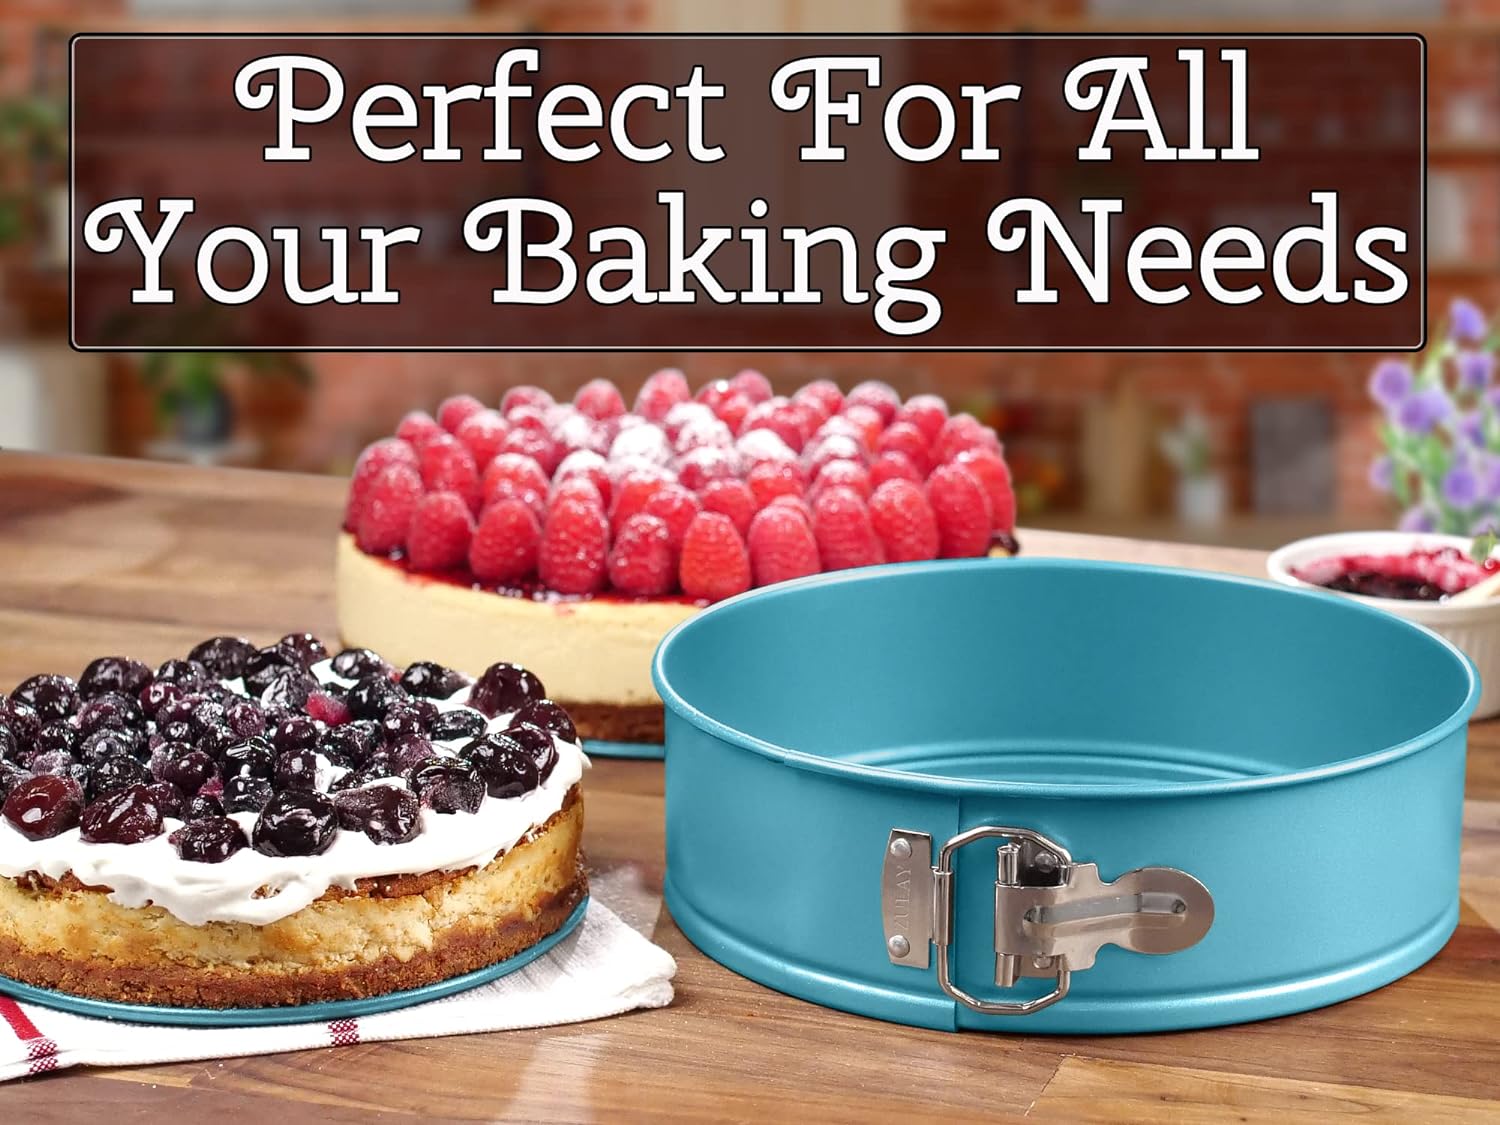 Cheesecake Pan - Springform Pan with Safe Non-Stick Coating